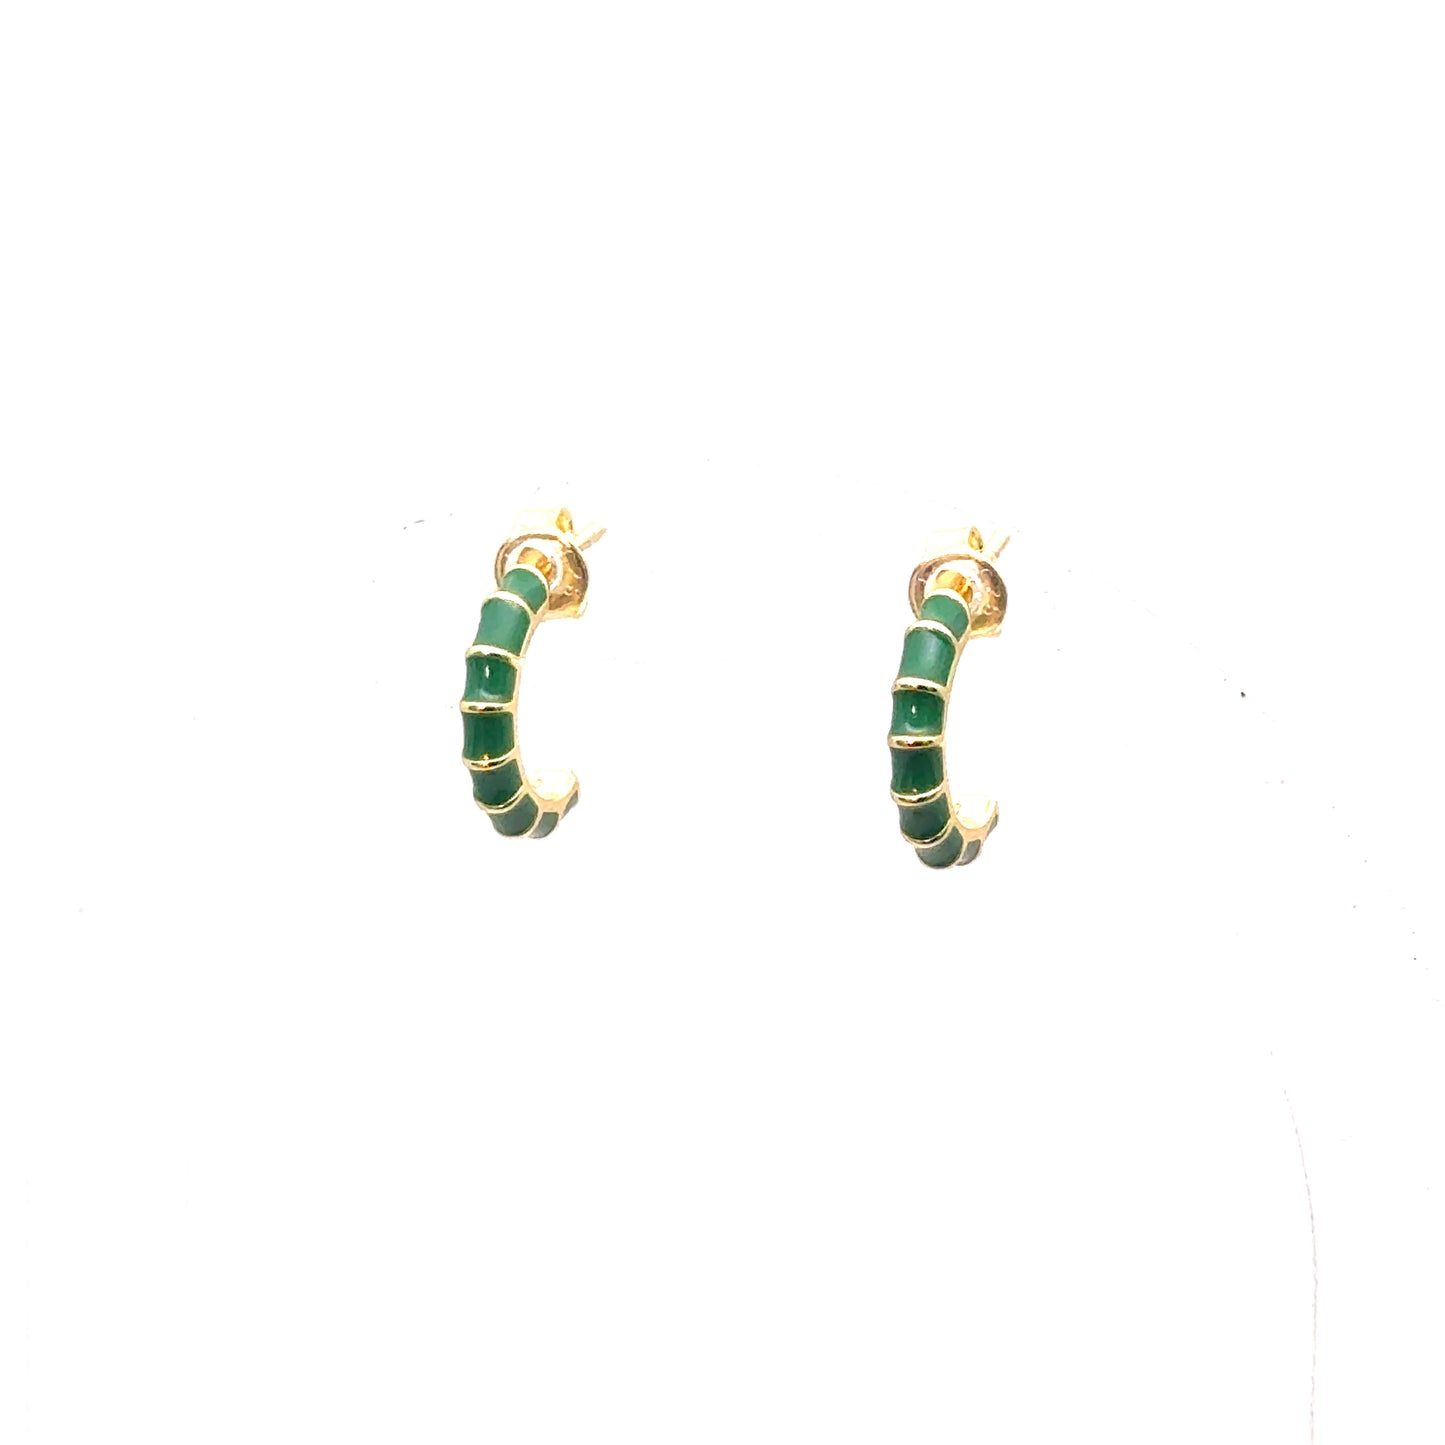 Bamboo Half-Round Earrings in Sterling Silver with Black Enamel or Green Enamel